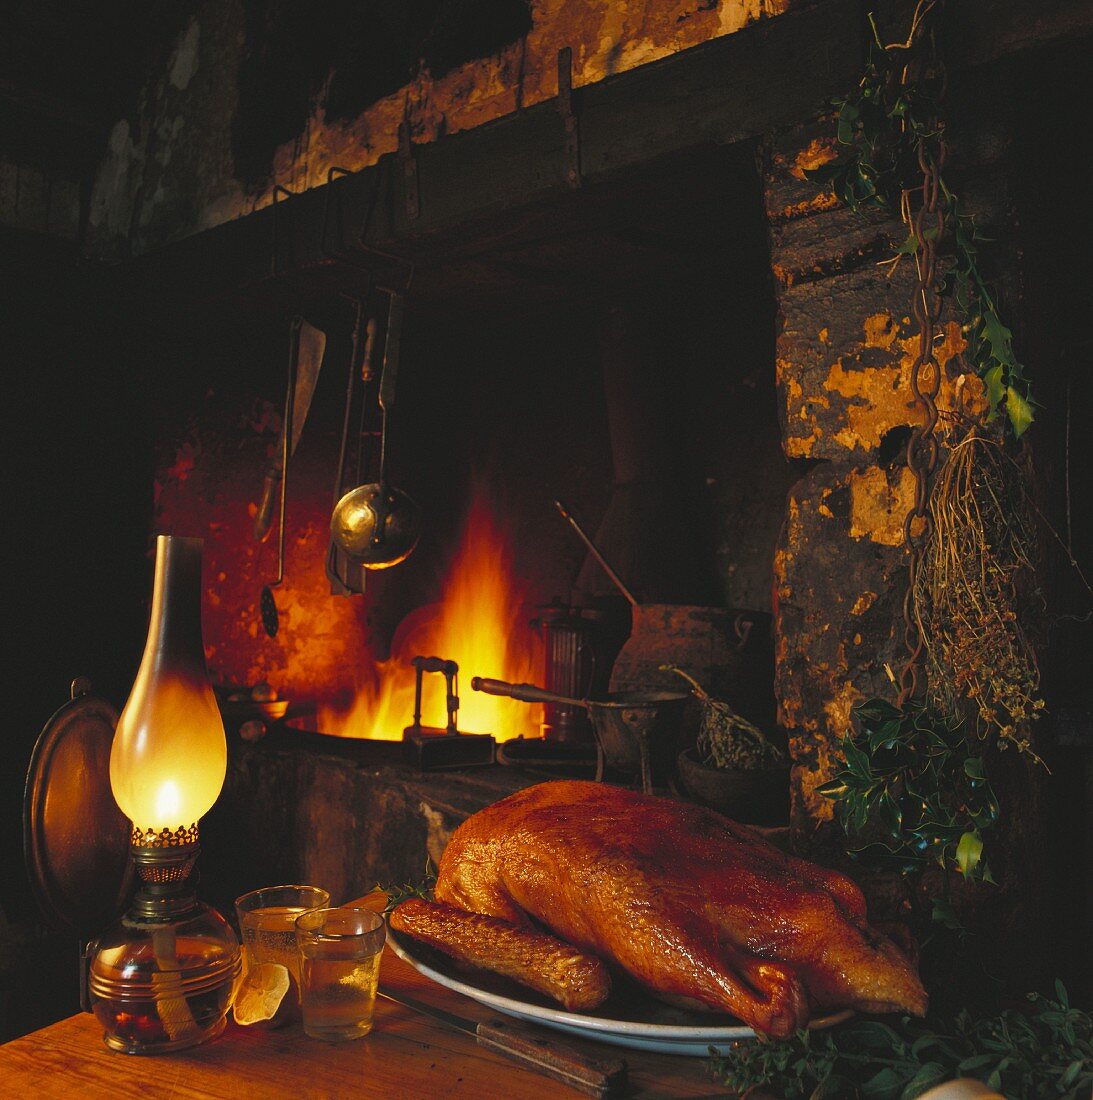 Roast duck on a platter in front of an open fireplace